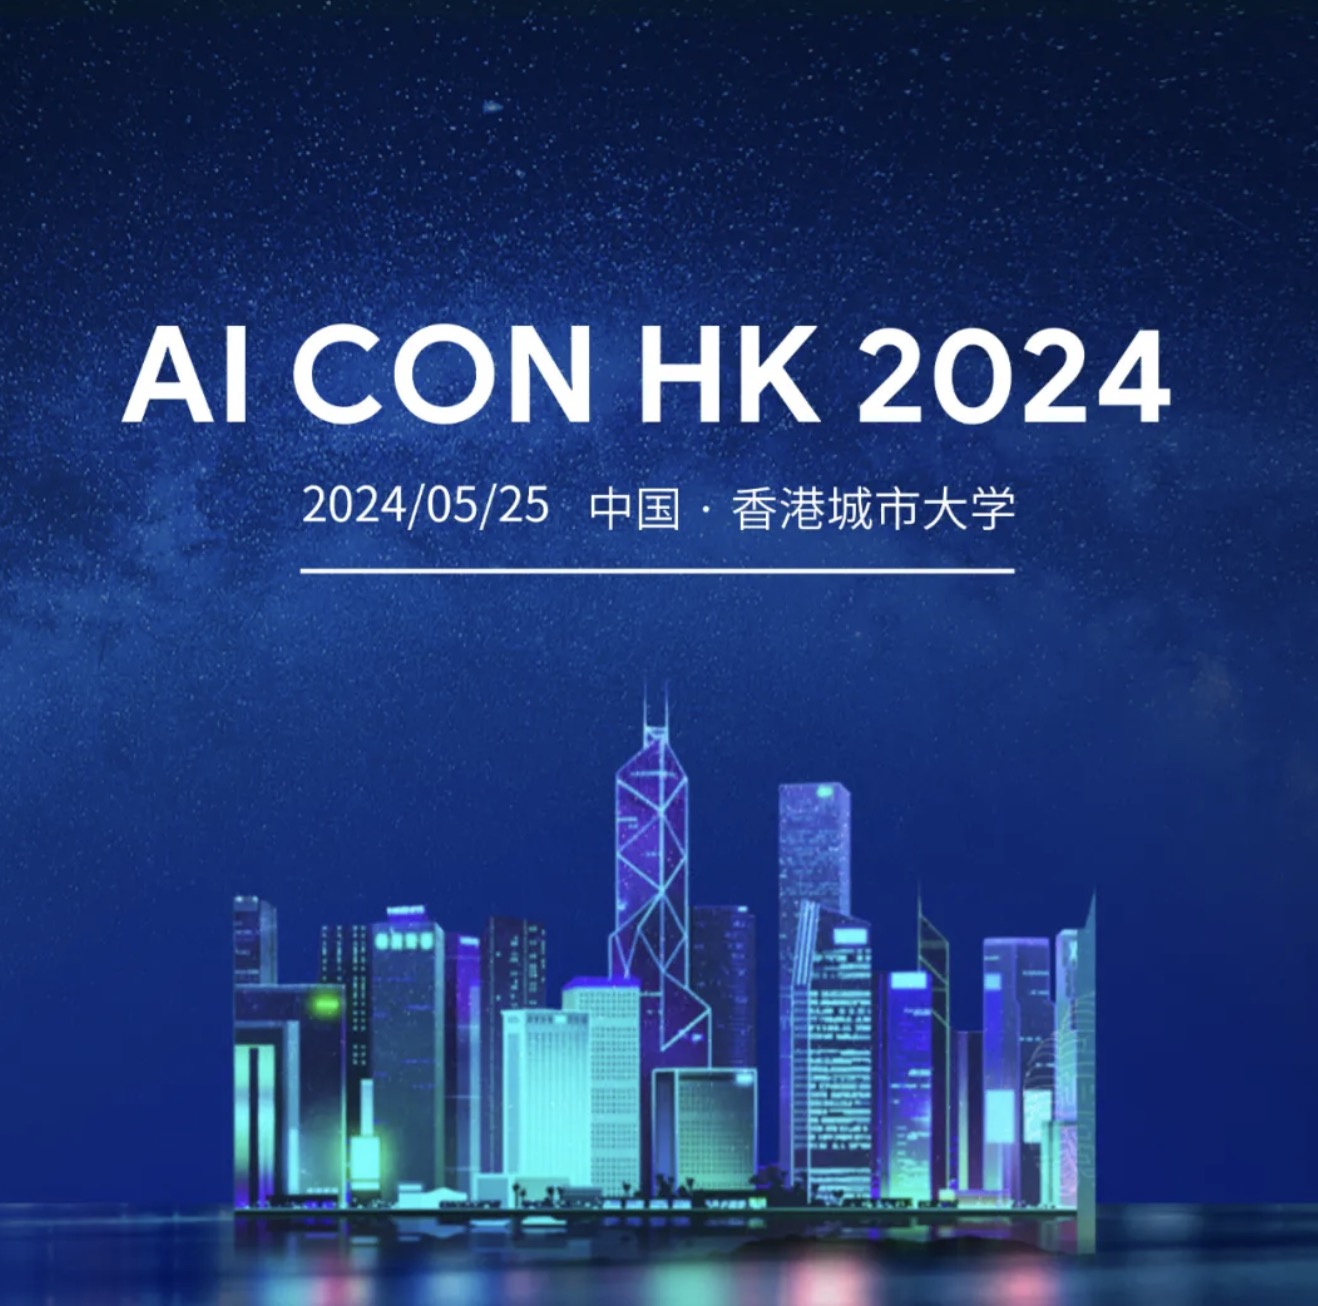 AI CON HK 2024完整日程、顶级演讲嘉宾和合作伙伴更新！香港见！